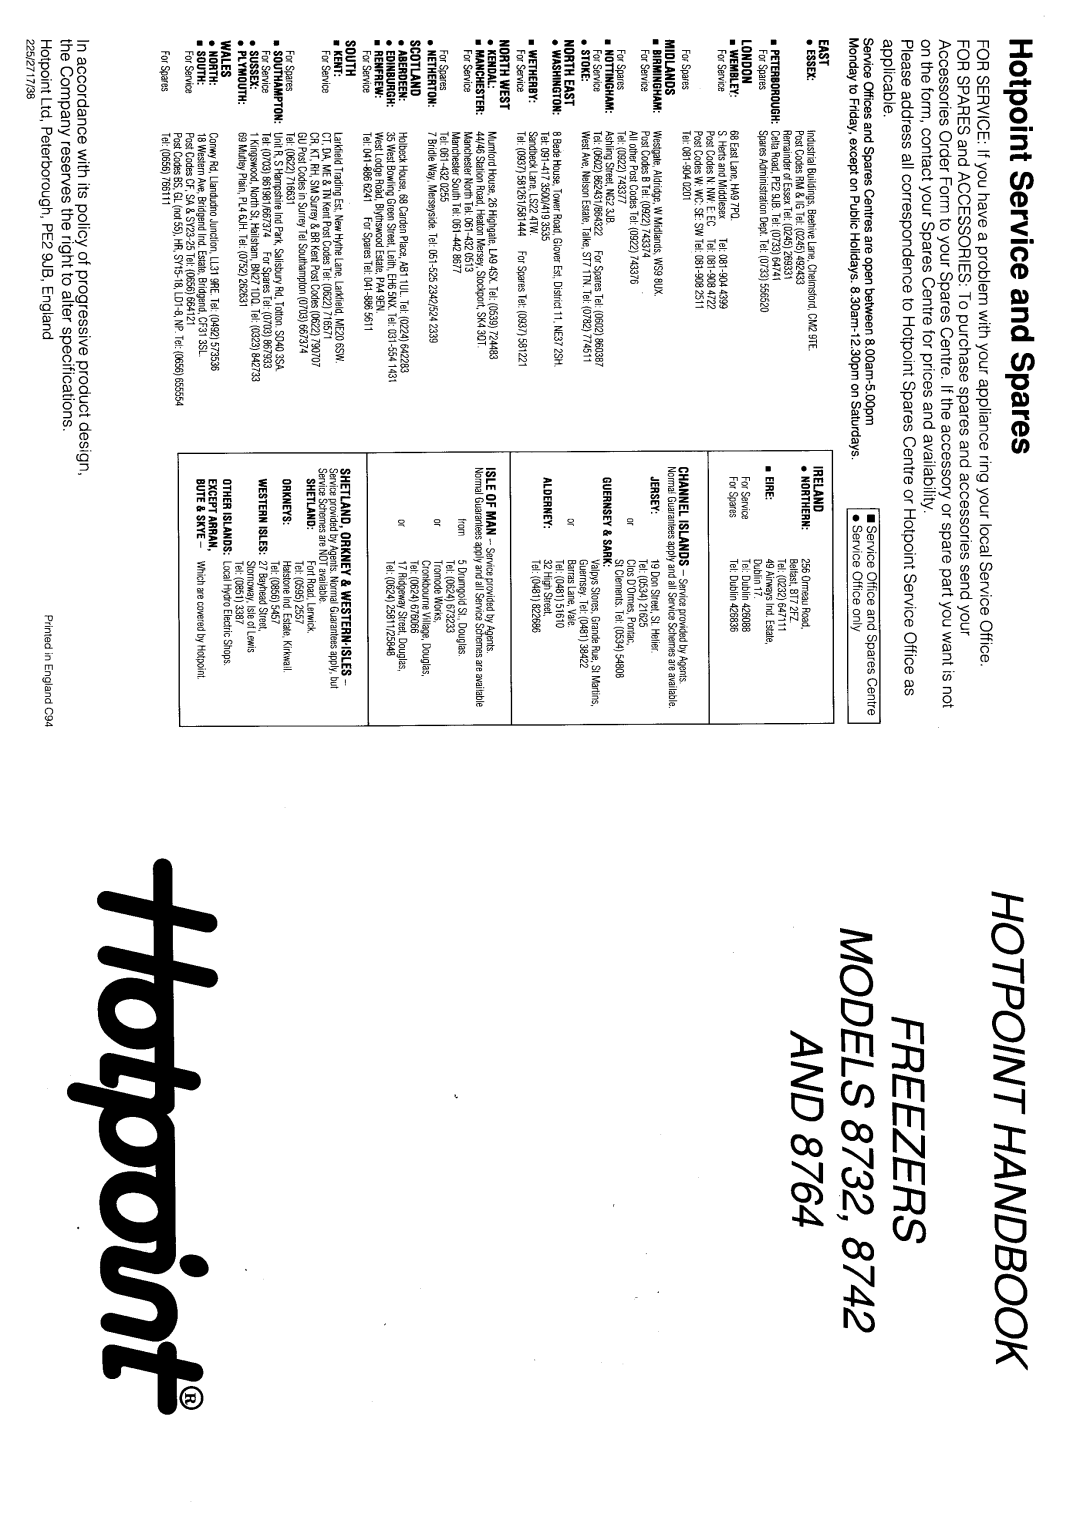 Hotpoint 8764 manual 